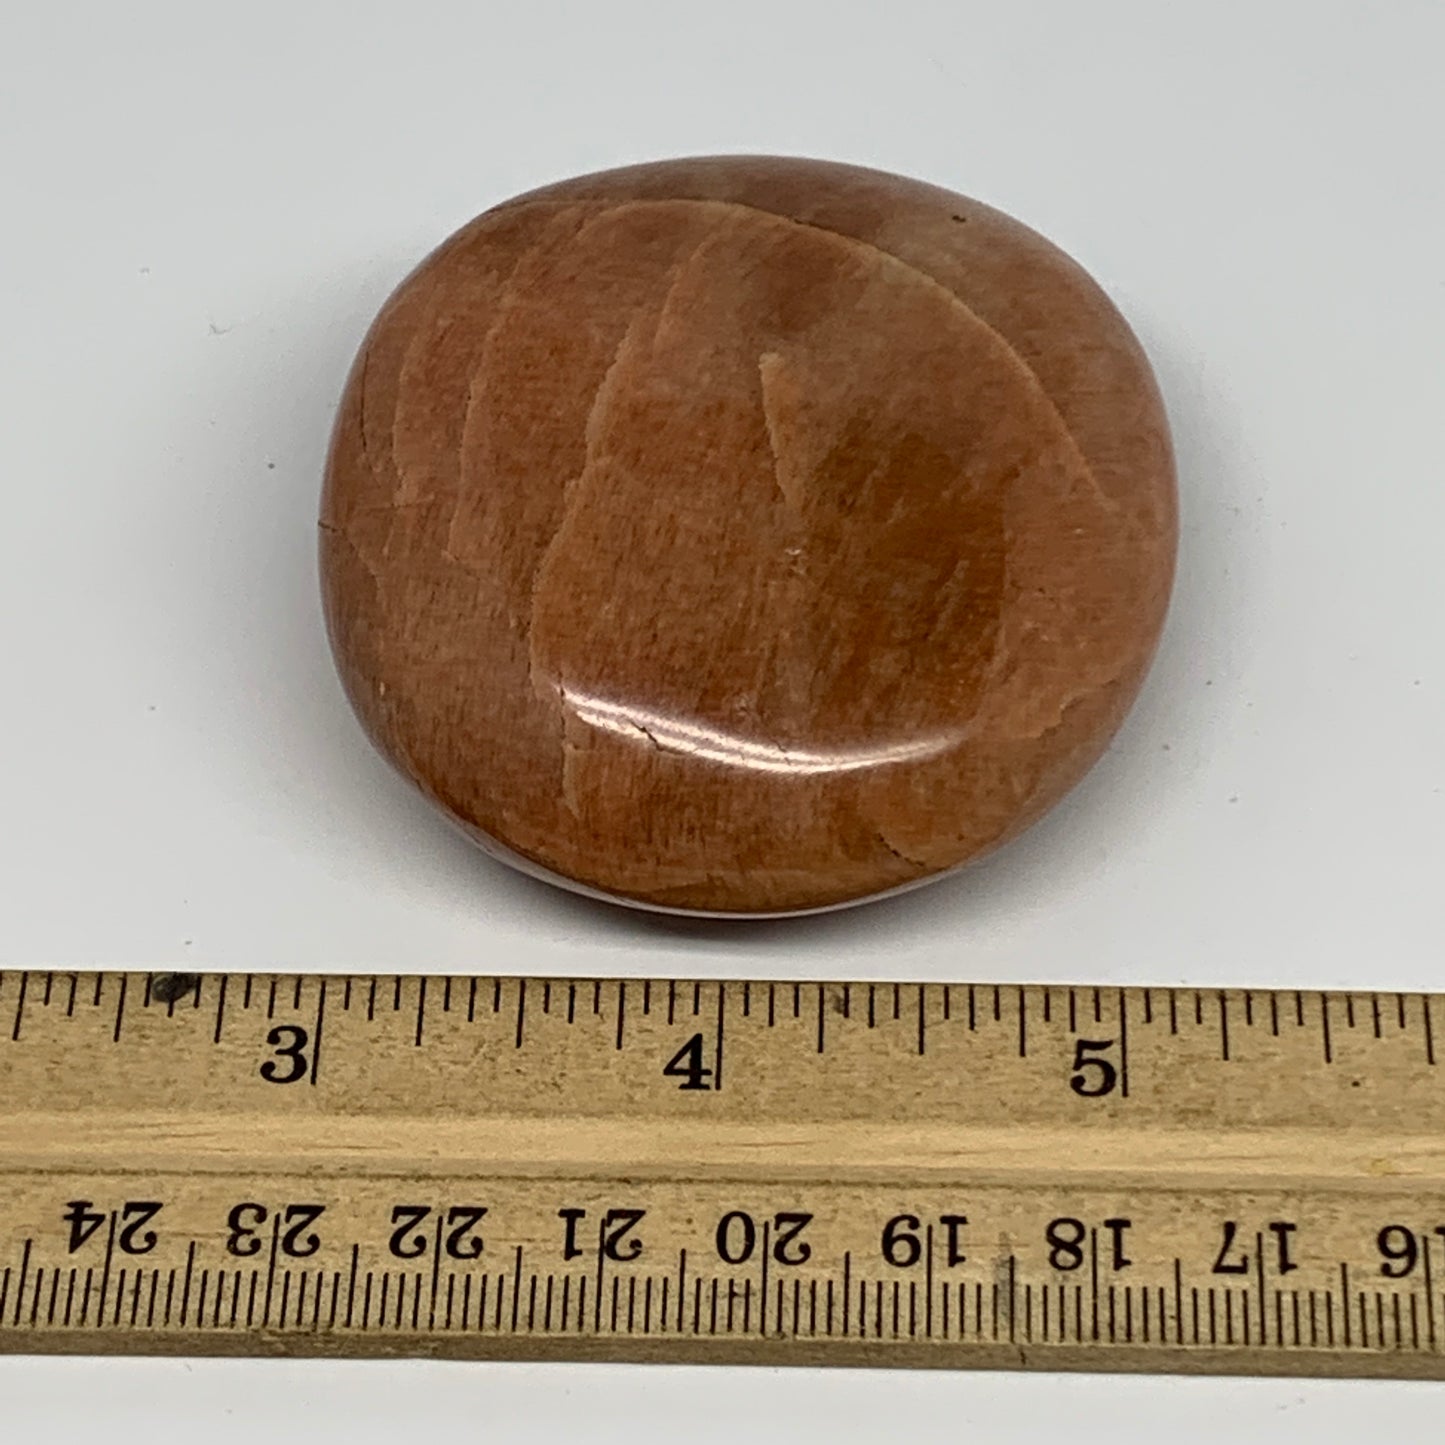 126.8g,2.4"x2.2"x1", Peach Moonstone Palm-Stone Polished Reiki Crystal, B15465